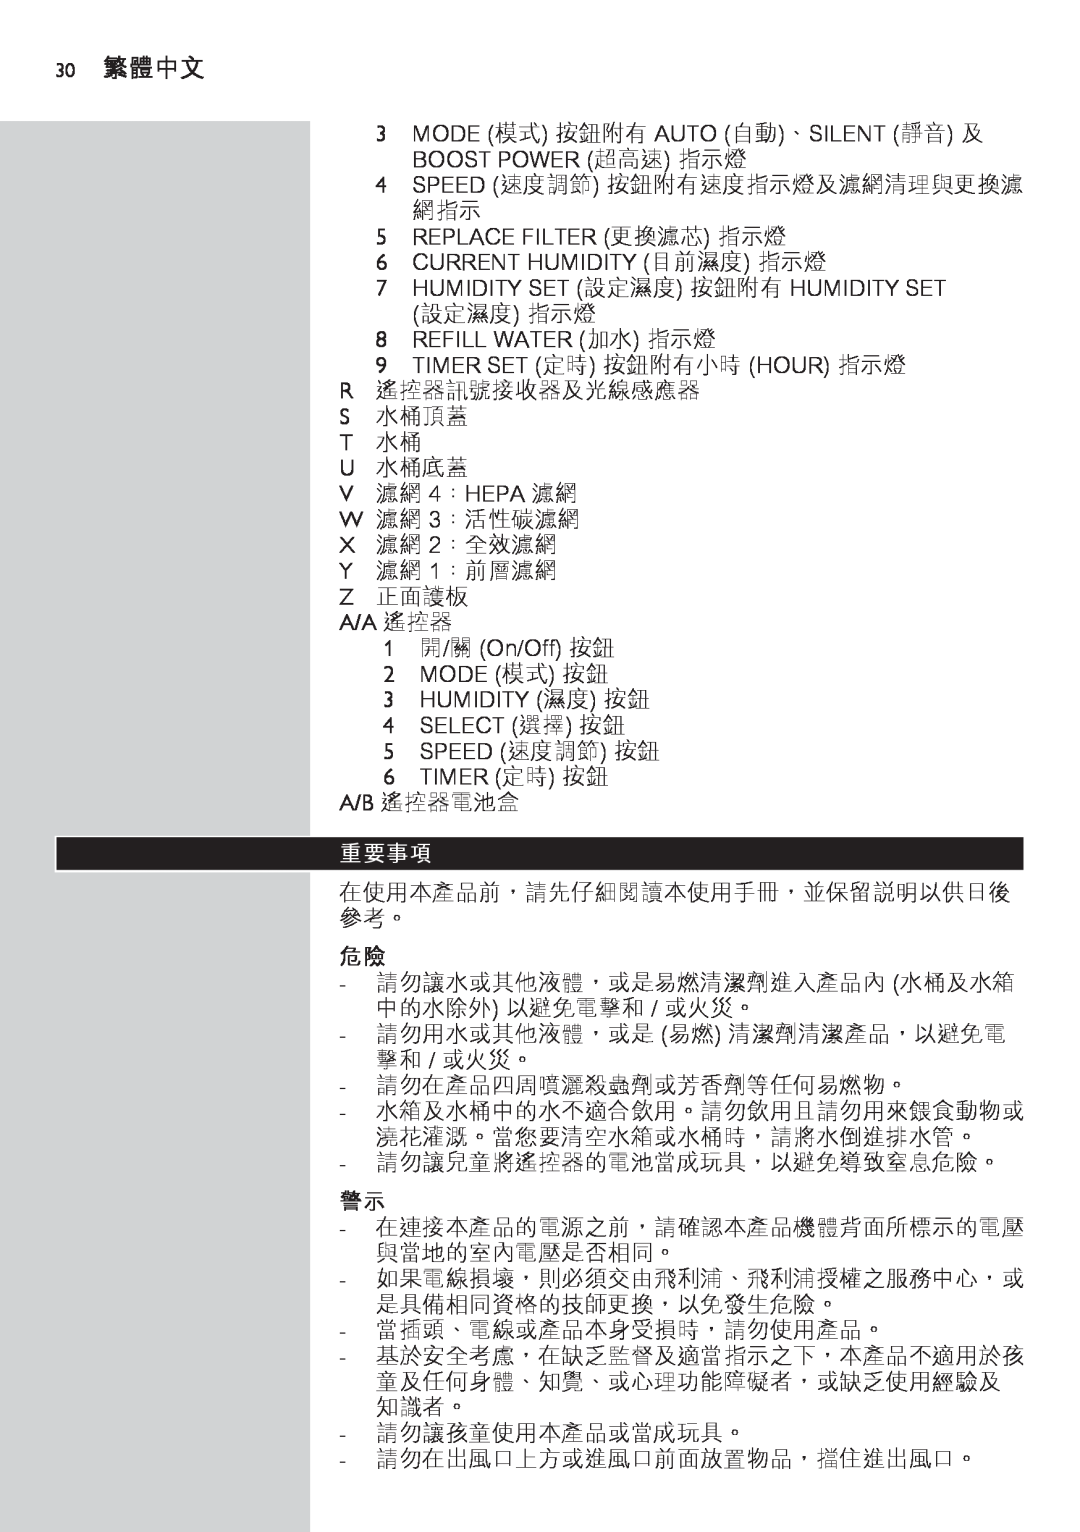 Philips AC4083 manual 30繁體中文, 重要事項 